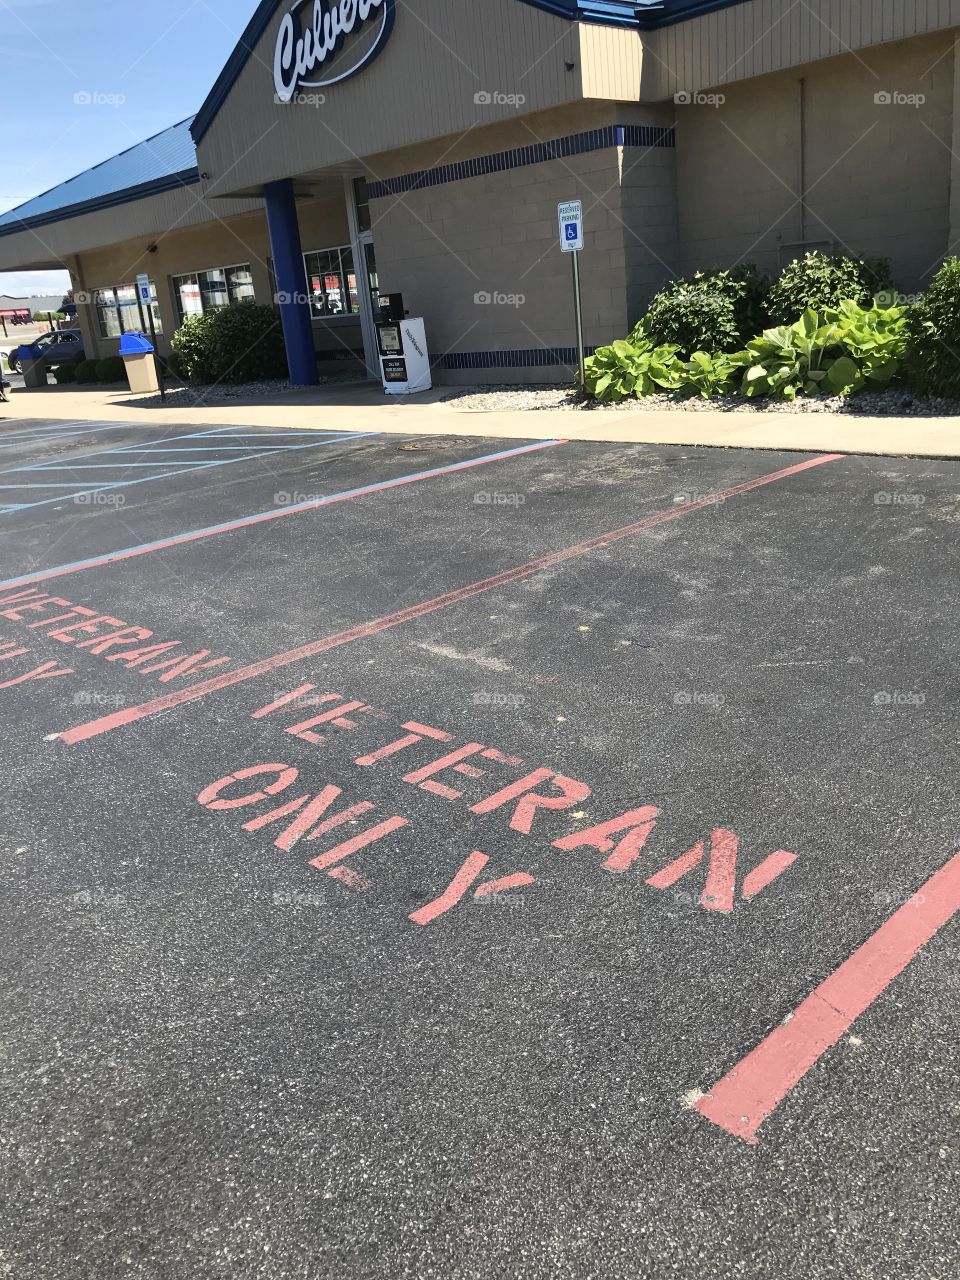 Honoring Veterans in every parking lot 